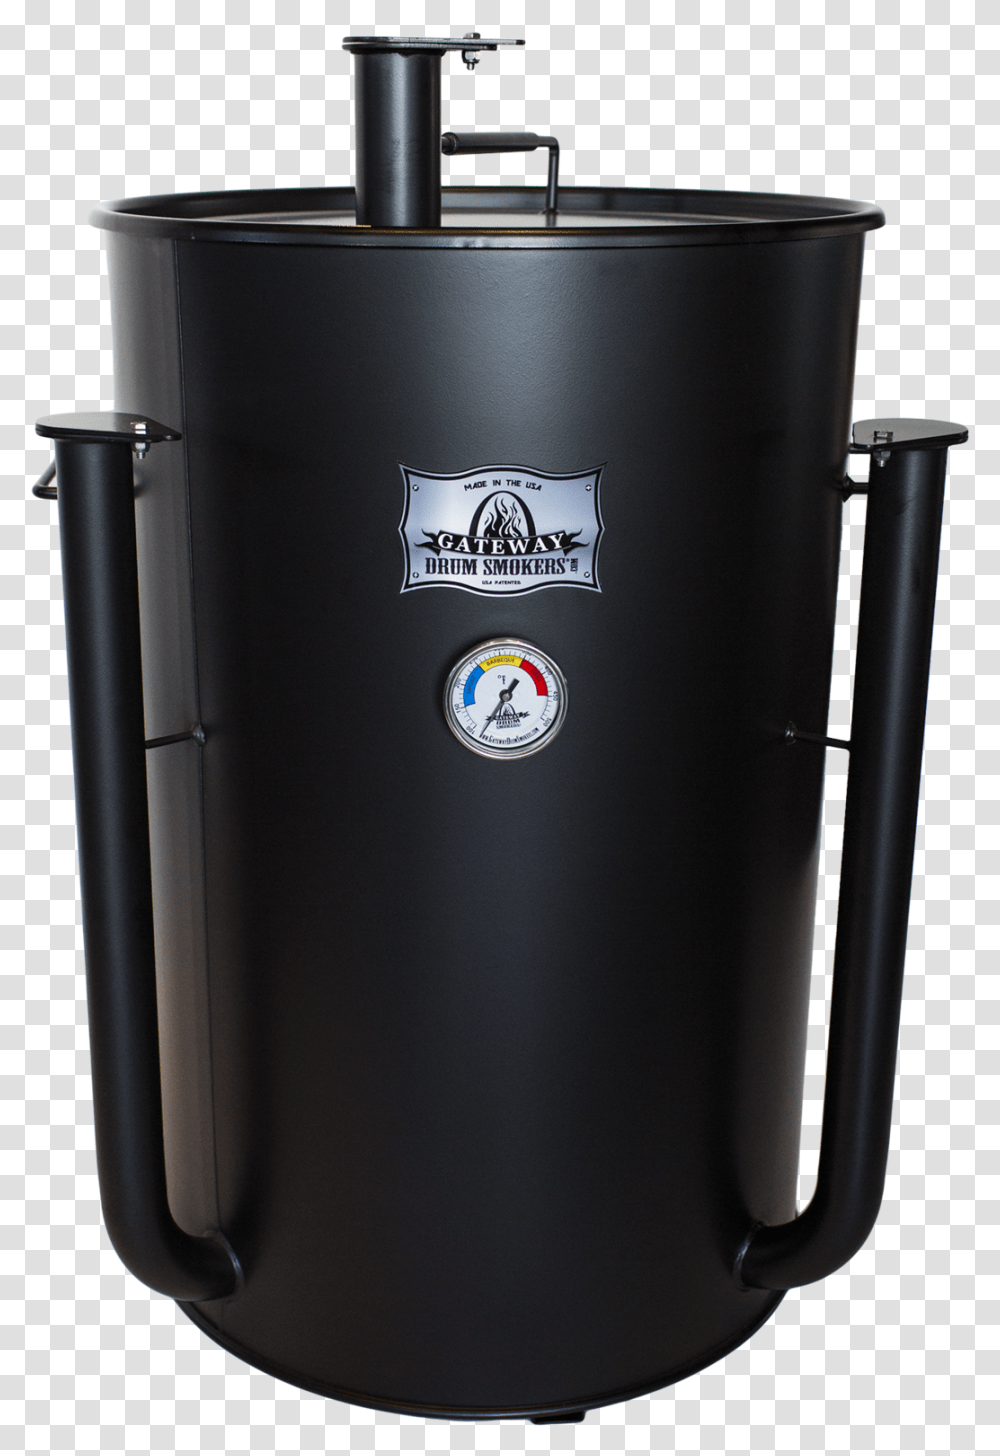 Gateway Drum Smoker, Logo, Trademark, Appliance Transparent Png